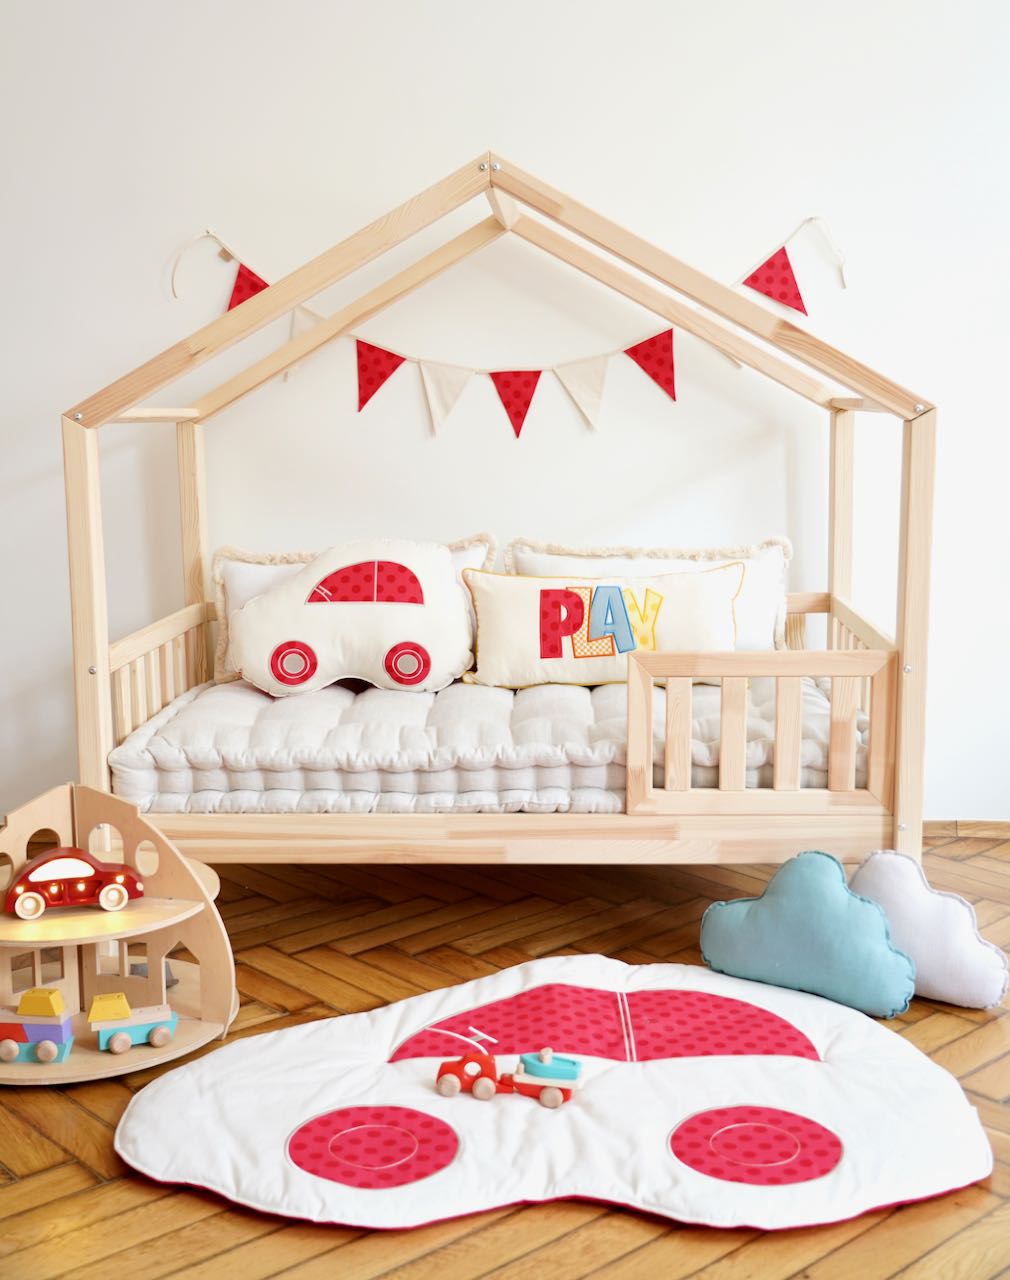 Garland "Red Dots" | Nursery & Kids Room Decor